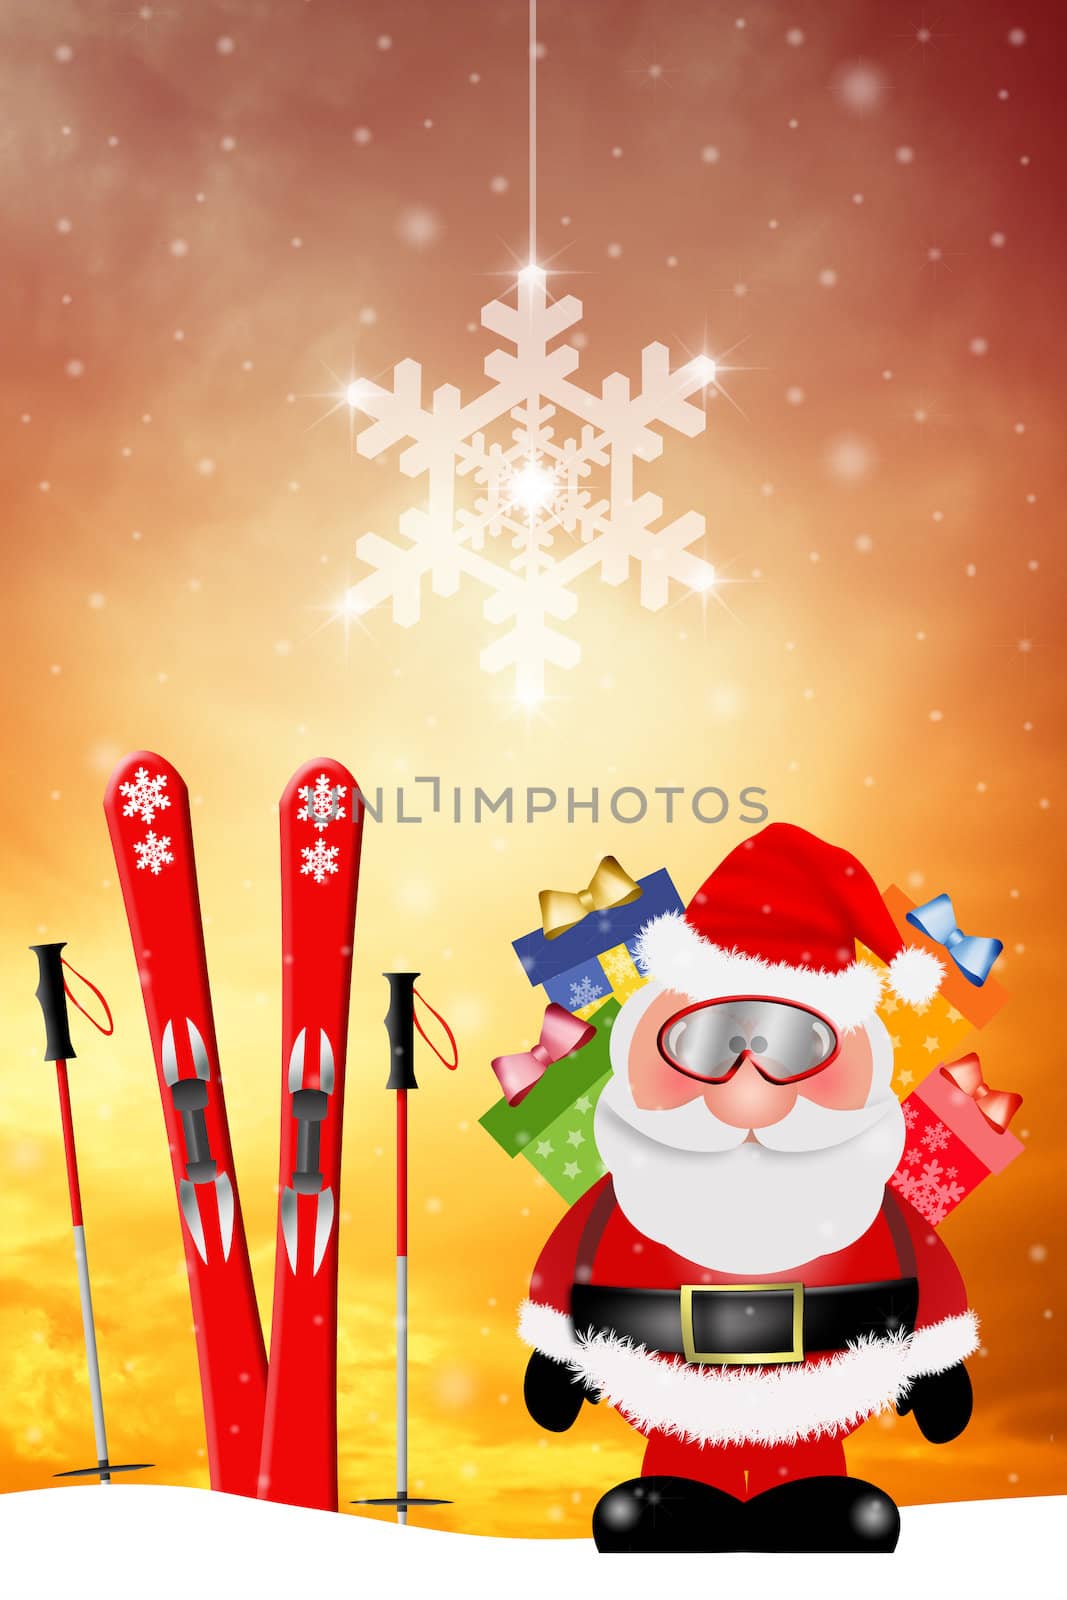 Santa Claus with ski for Christmas